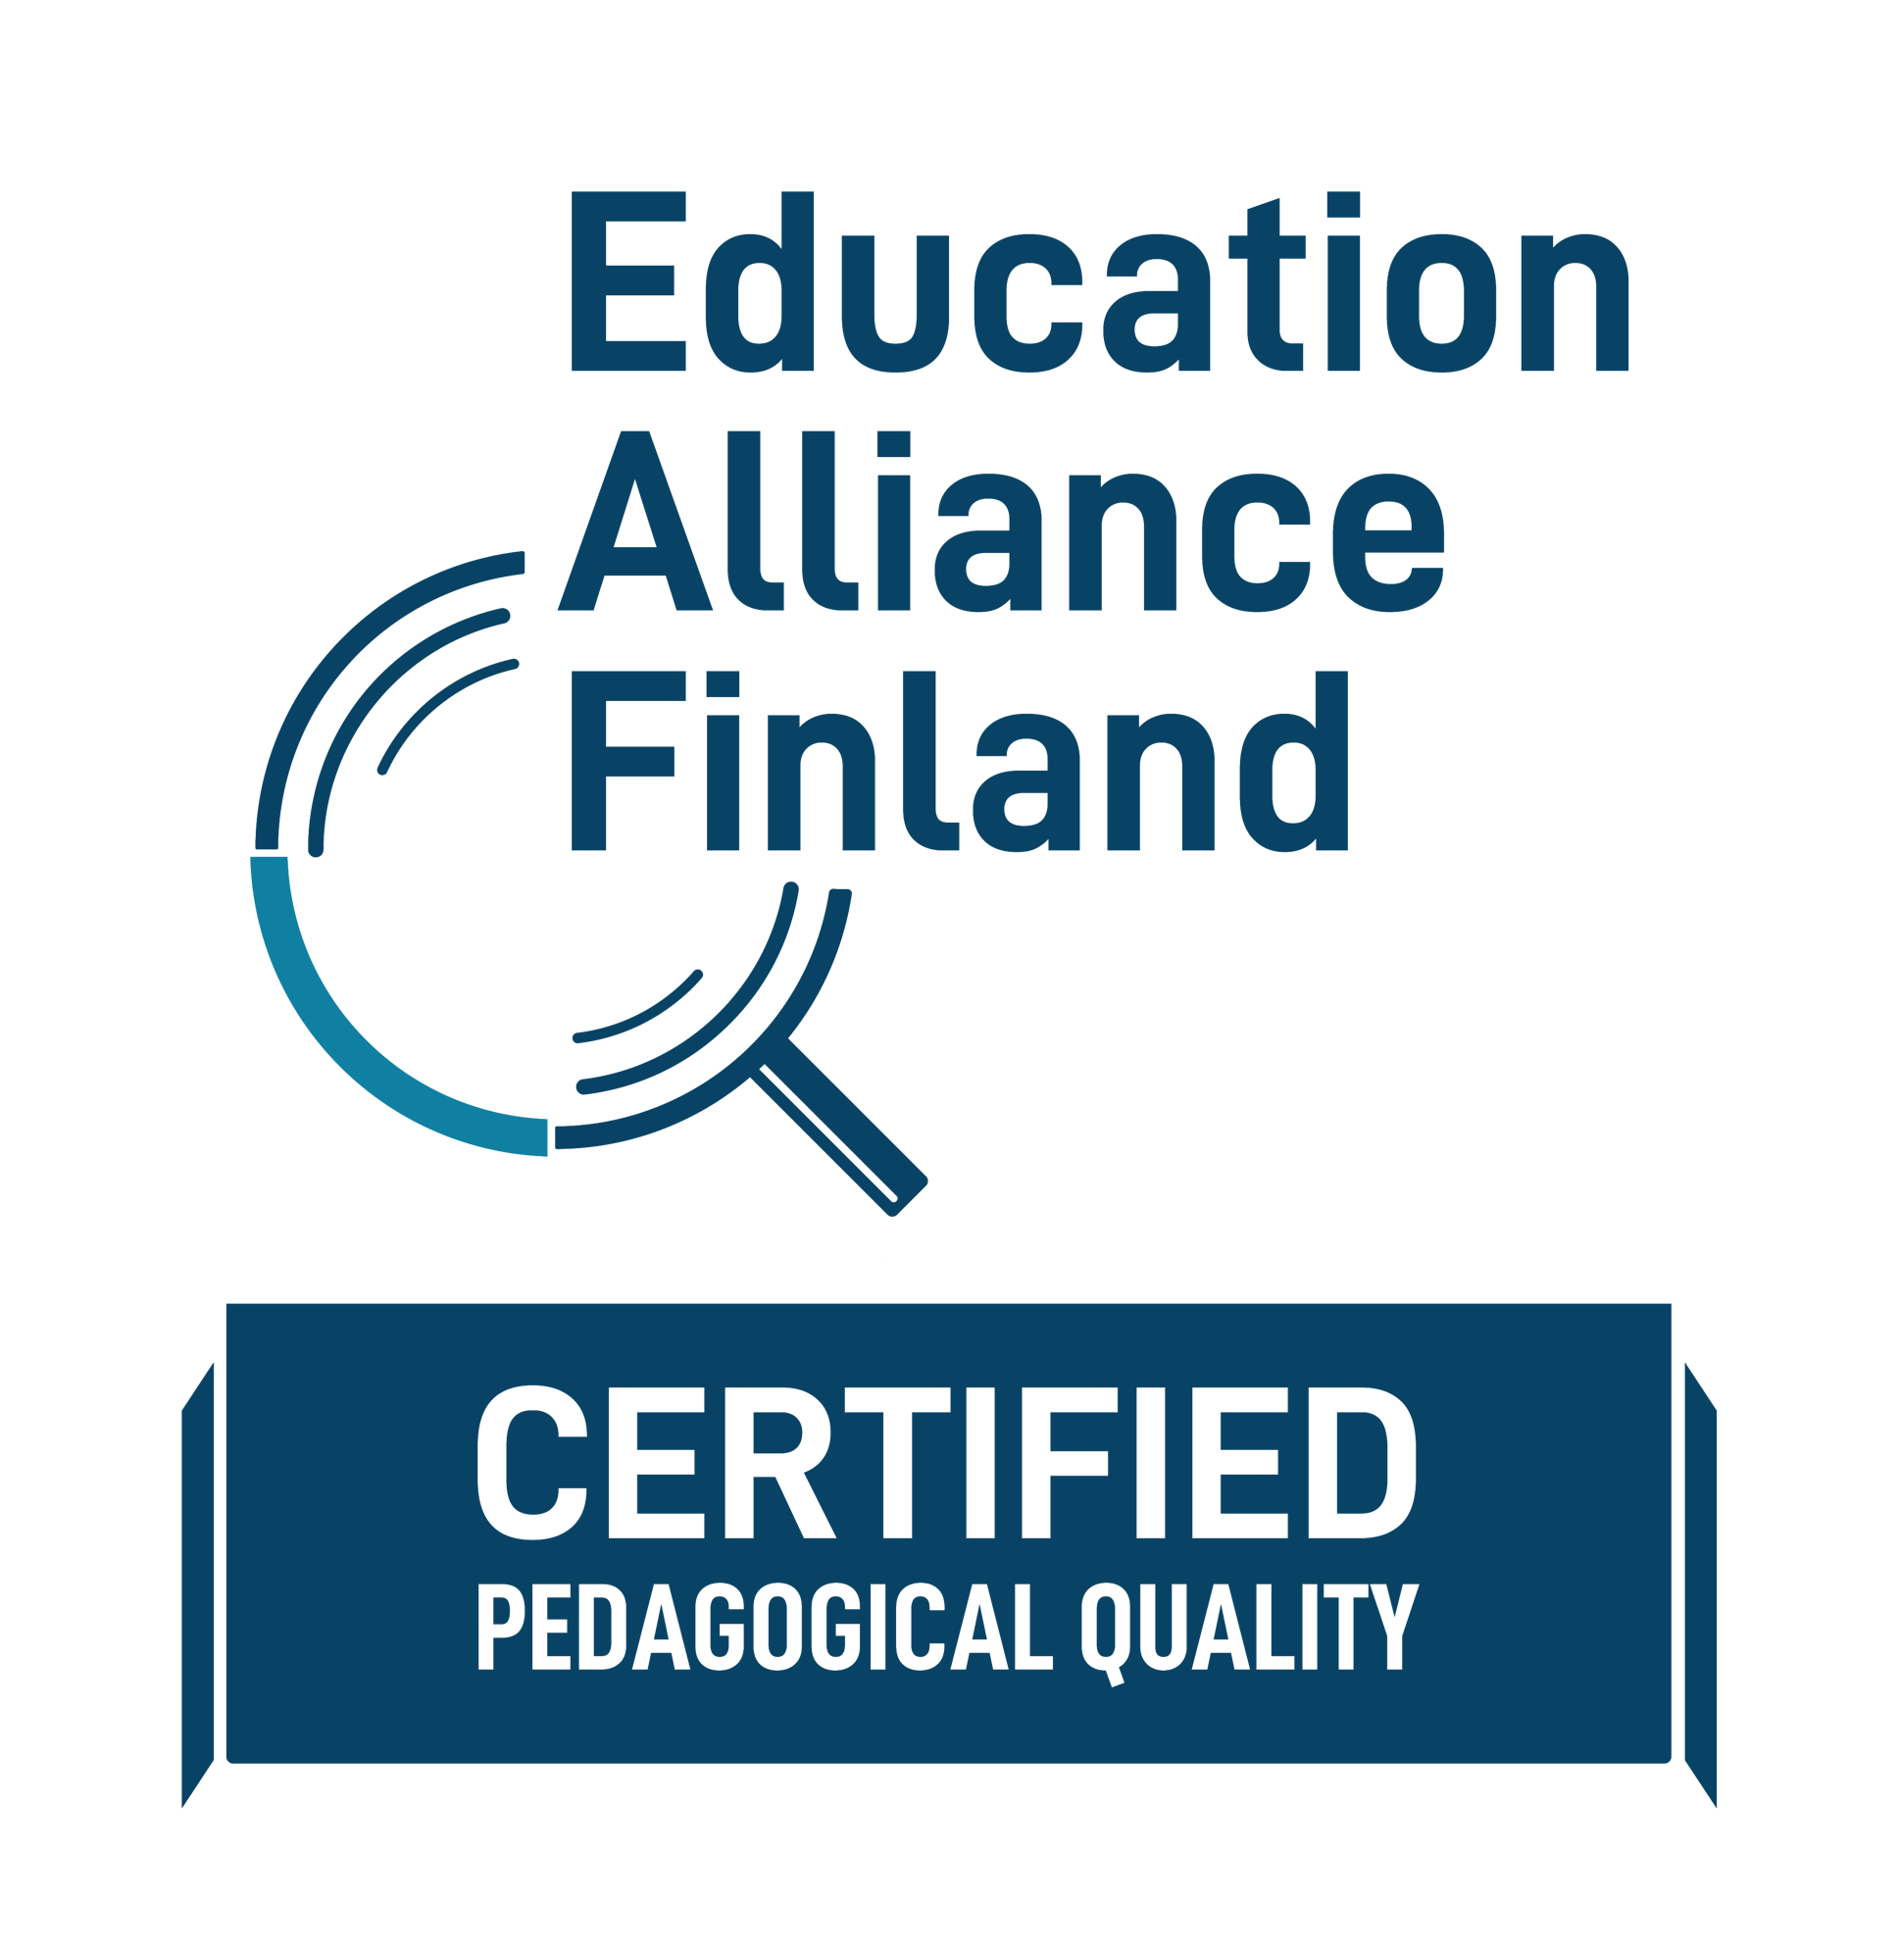 EducationAllianceFinland_Certificate-blue